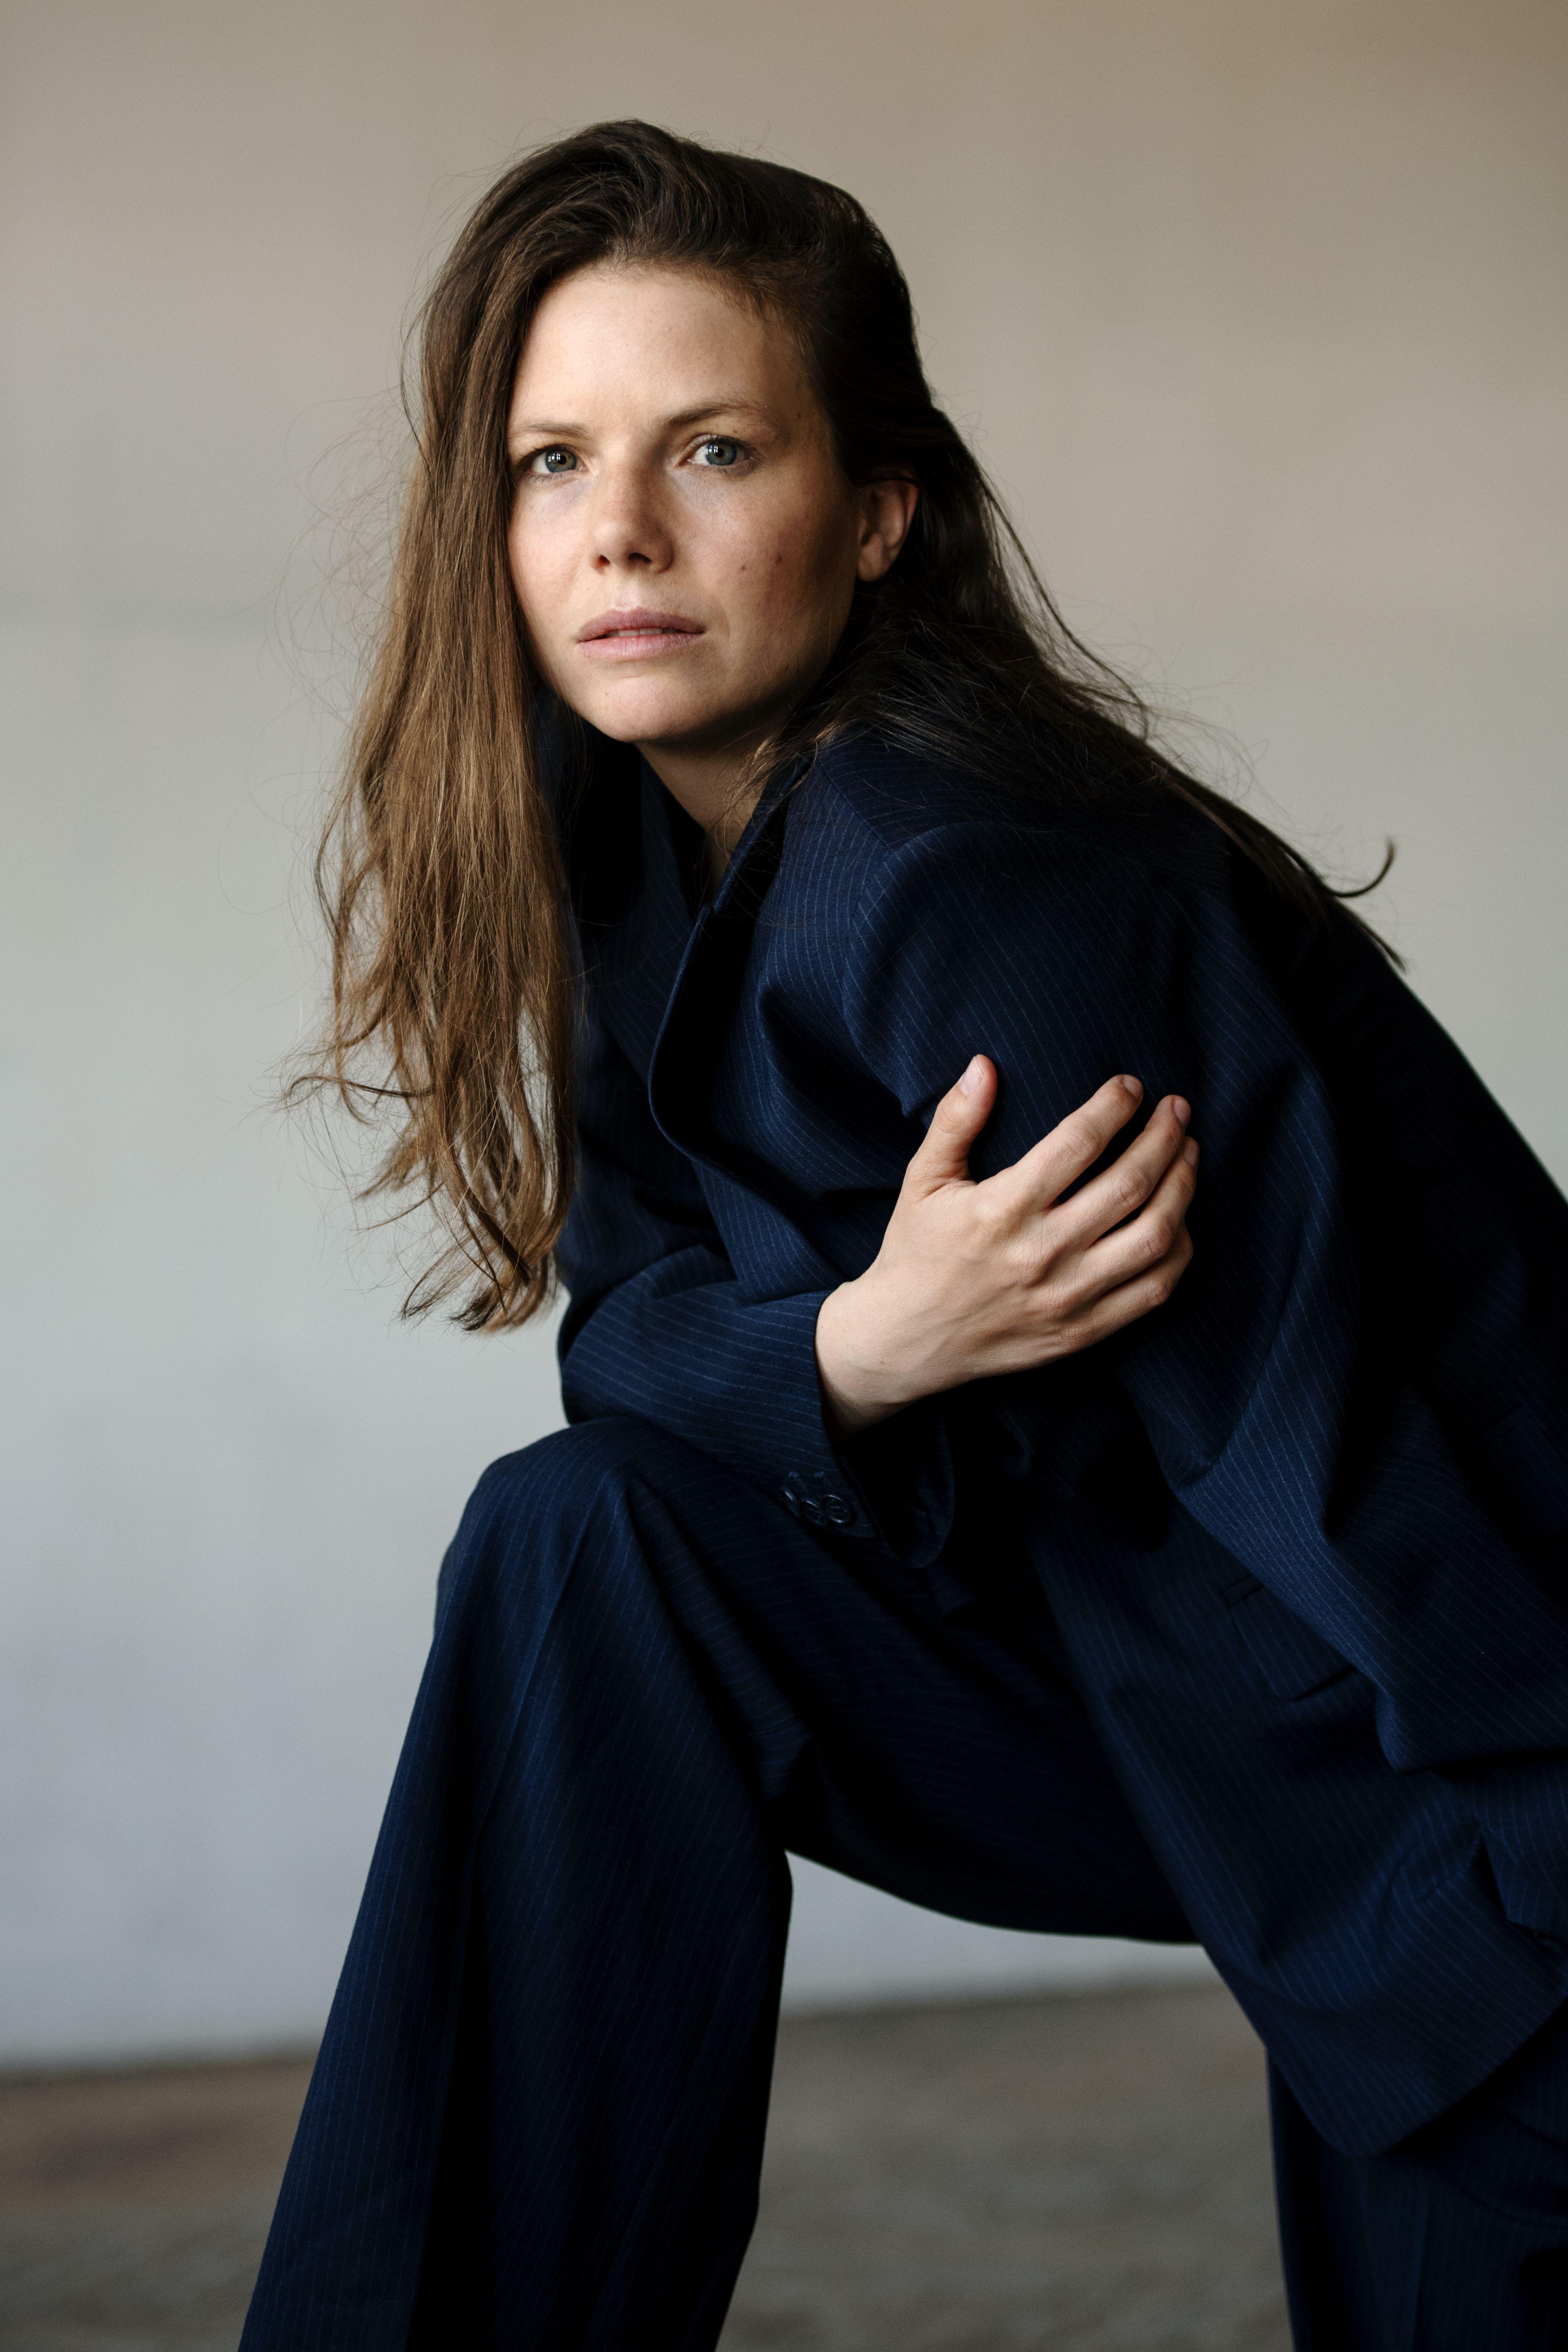 Photo of Leonie Rainer by Jeanne Degraa